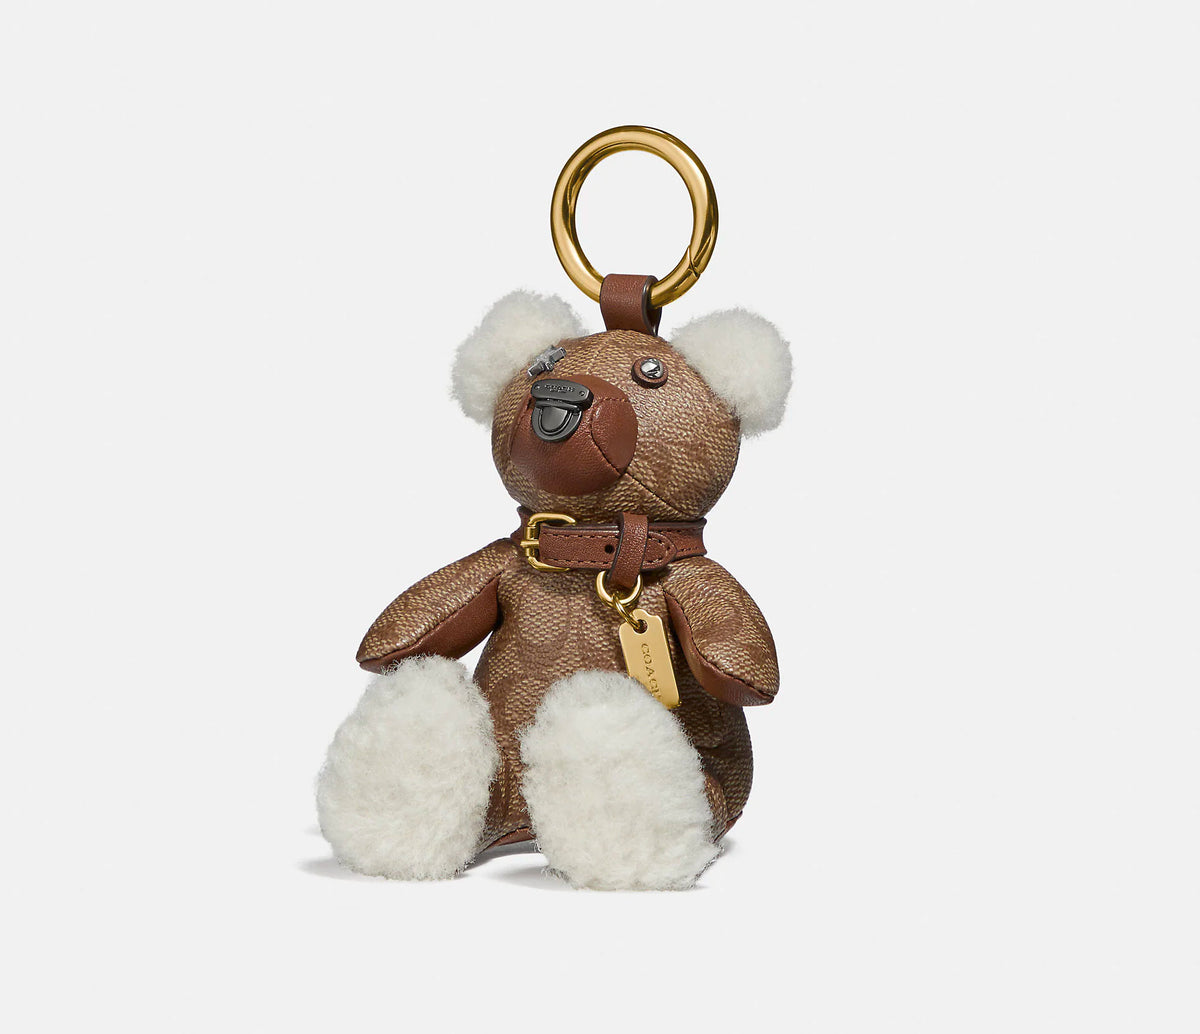 Louis Vuitton Accessories - Bear Bag Charms Key Ring Holder